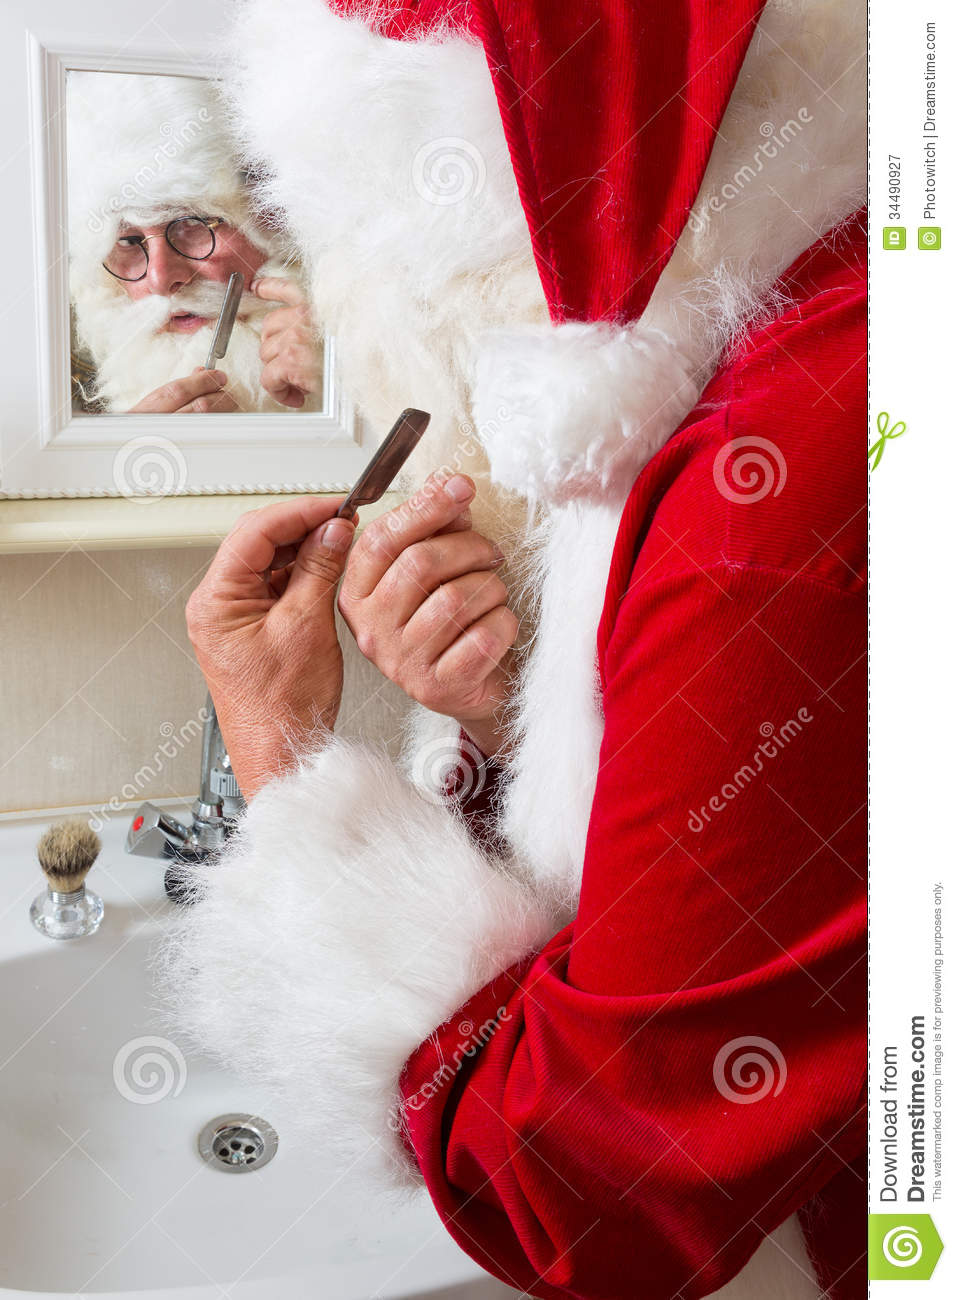 Santa Claus Is Shaving Royalty Free Stock Photography   Image